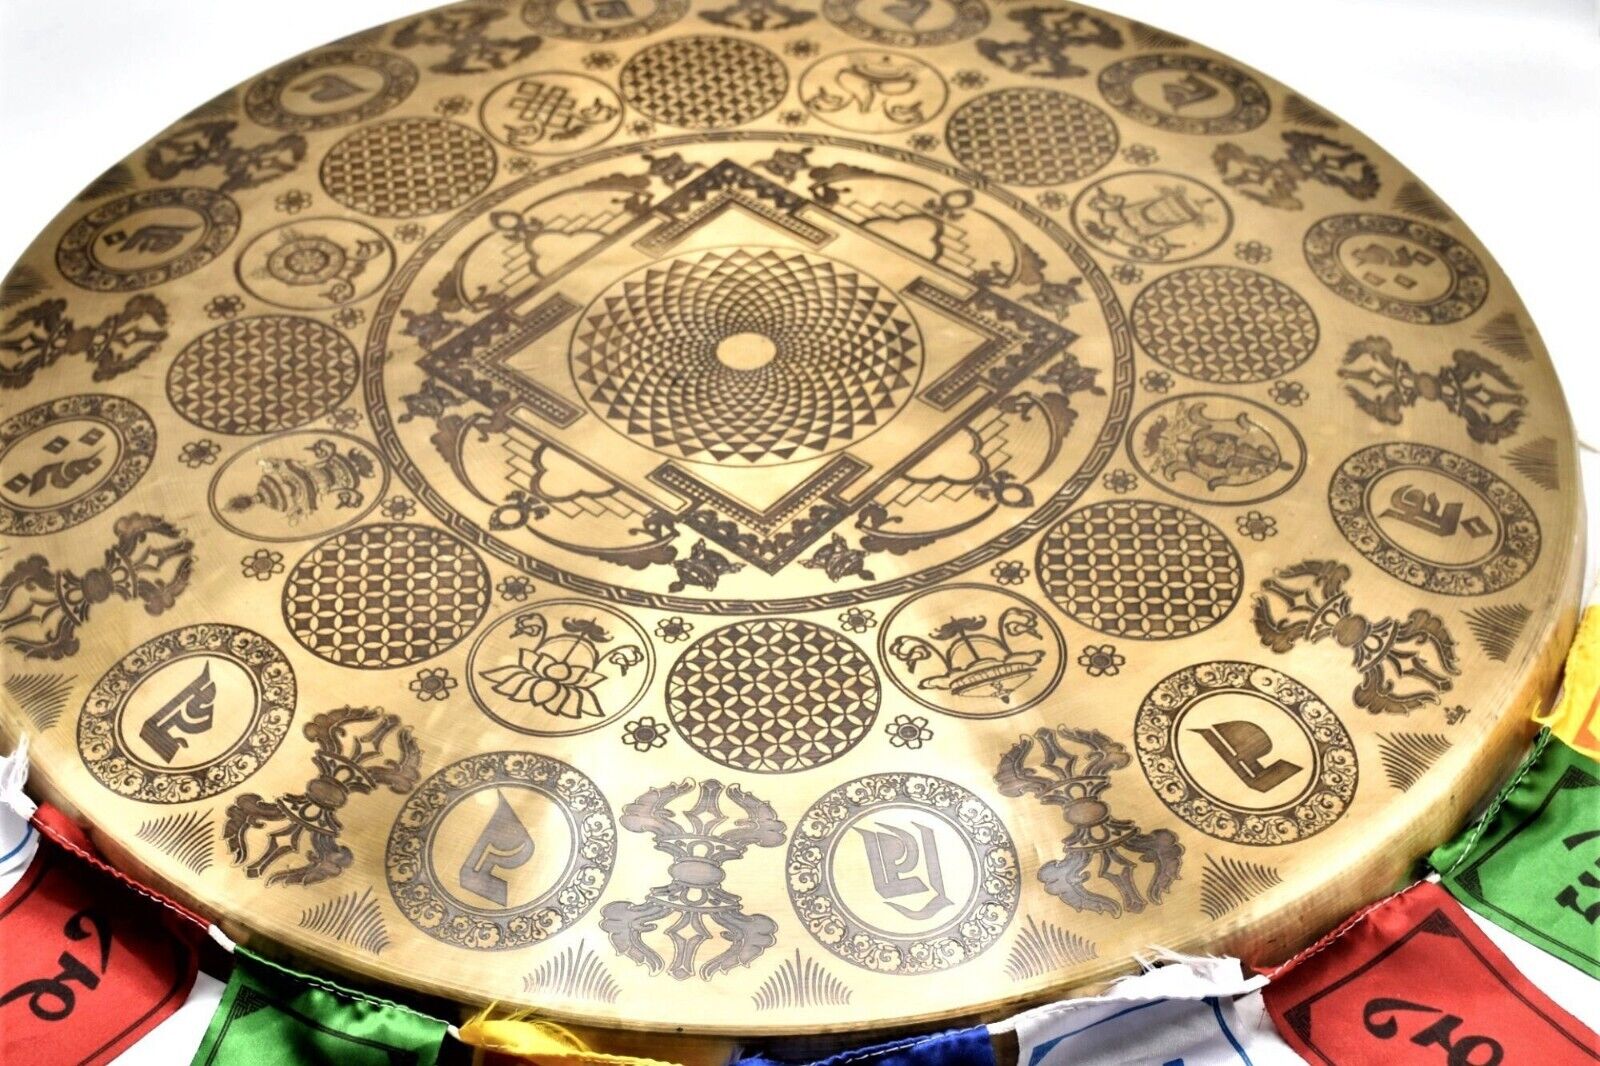 50cm beautiful temple gong bell Handmade in Nepal - Meditation, Healing